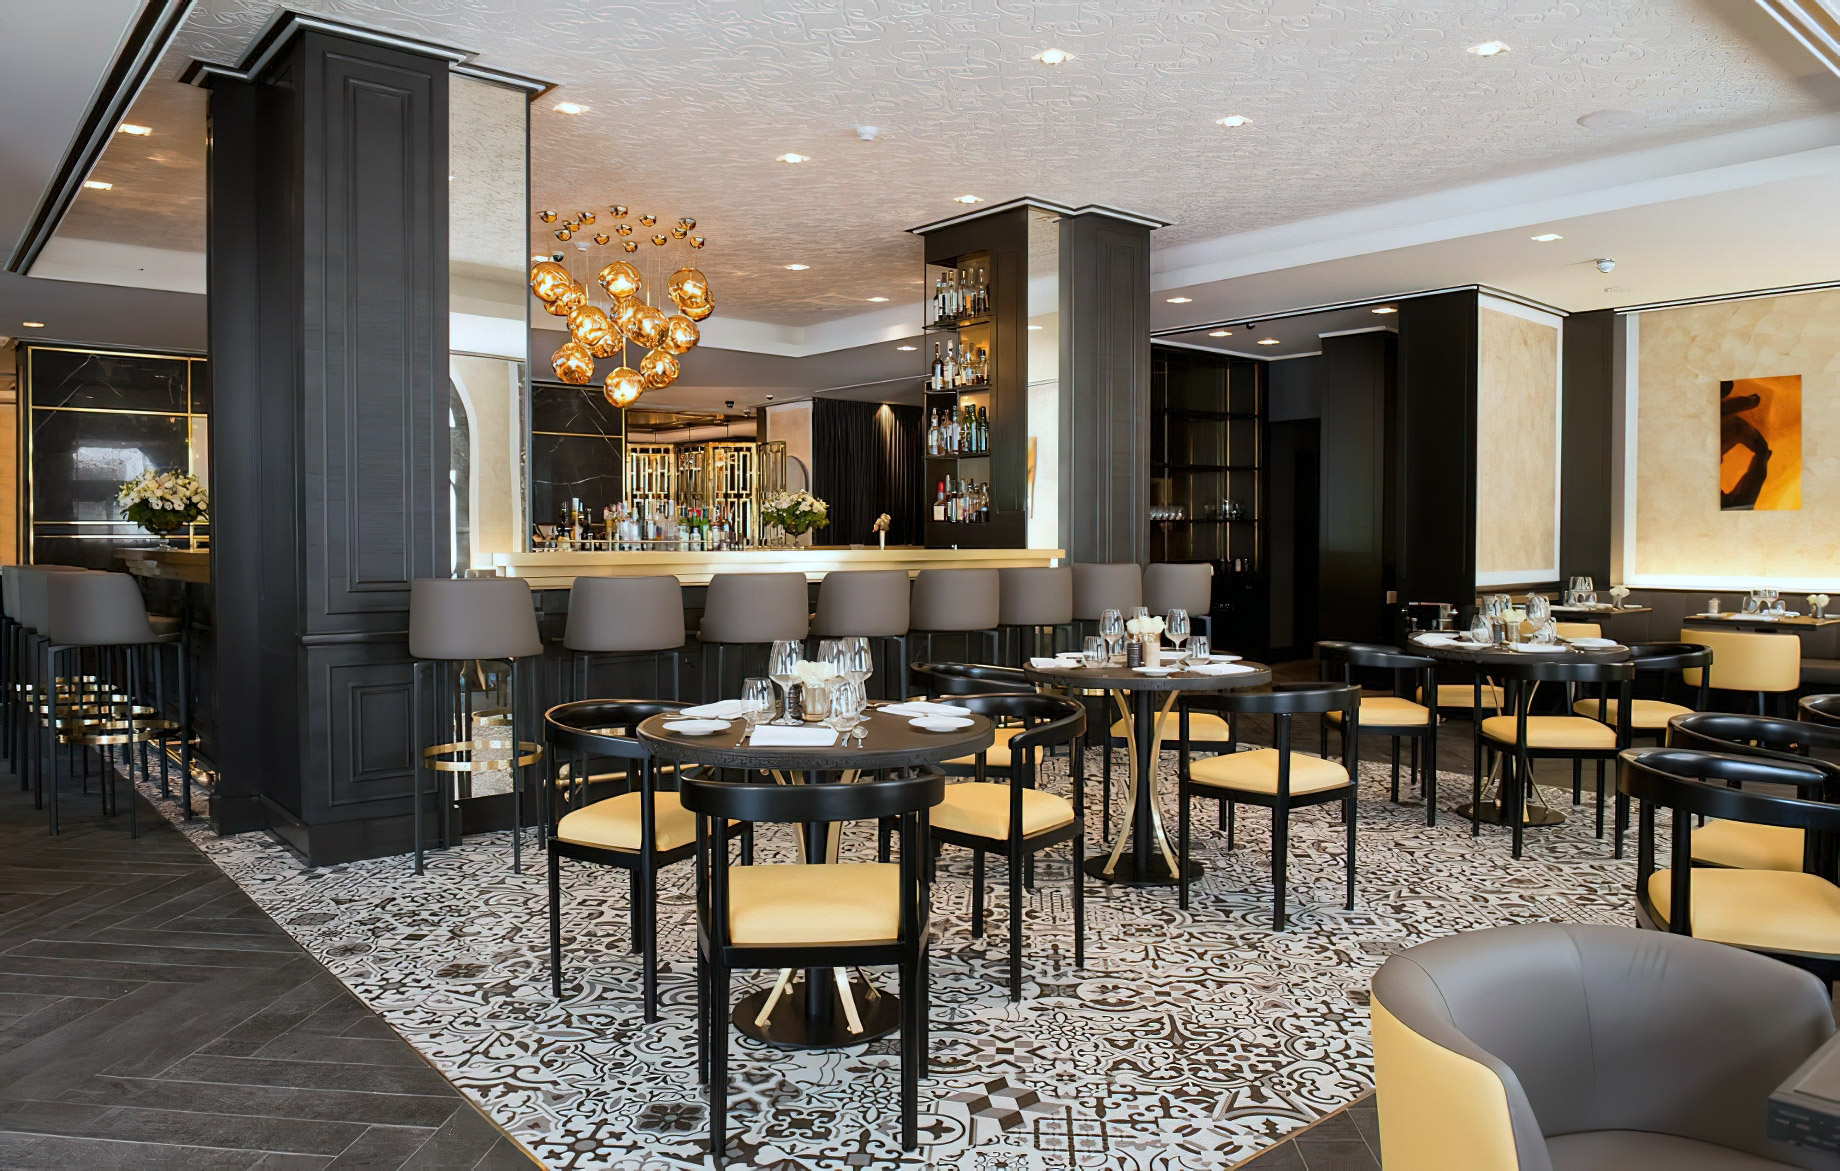 Baglioni Hotel London - South Kensington, London, United Kingdom - Brunello Bar and Restaurant